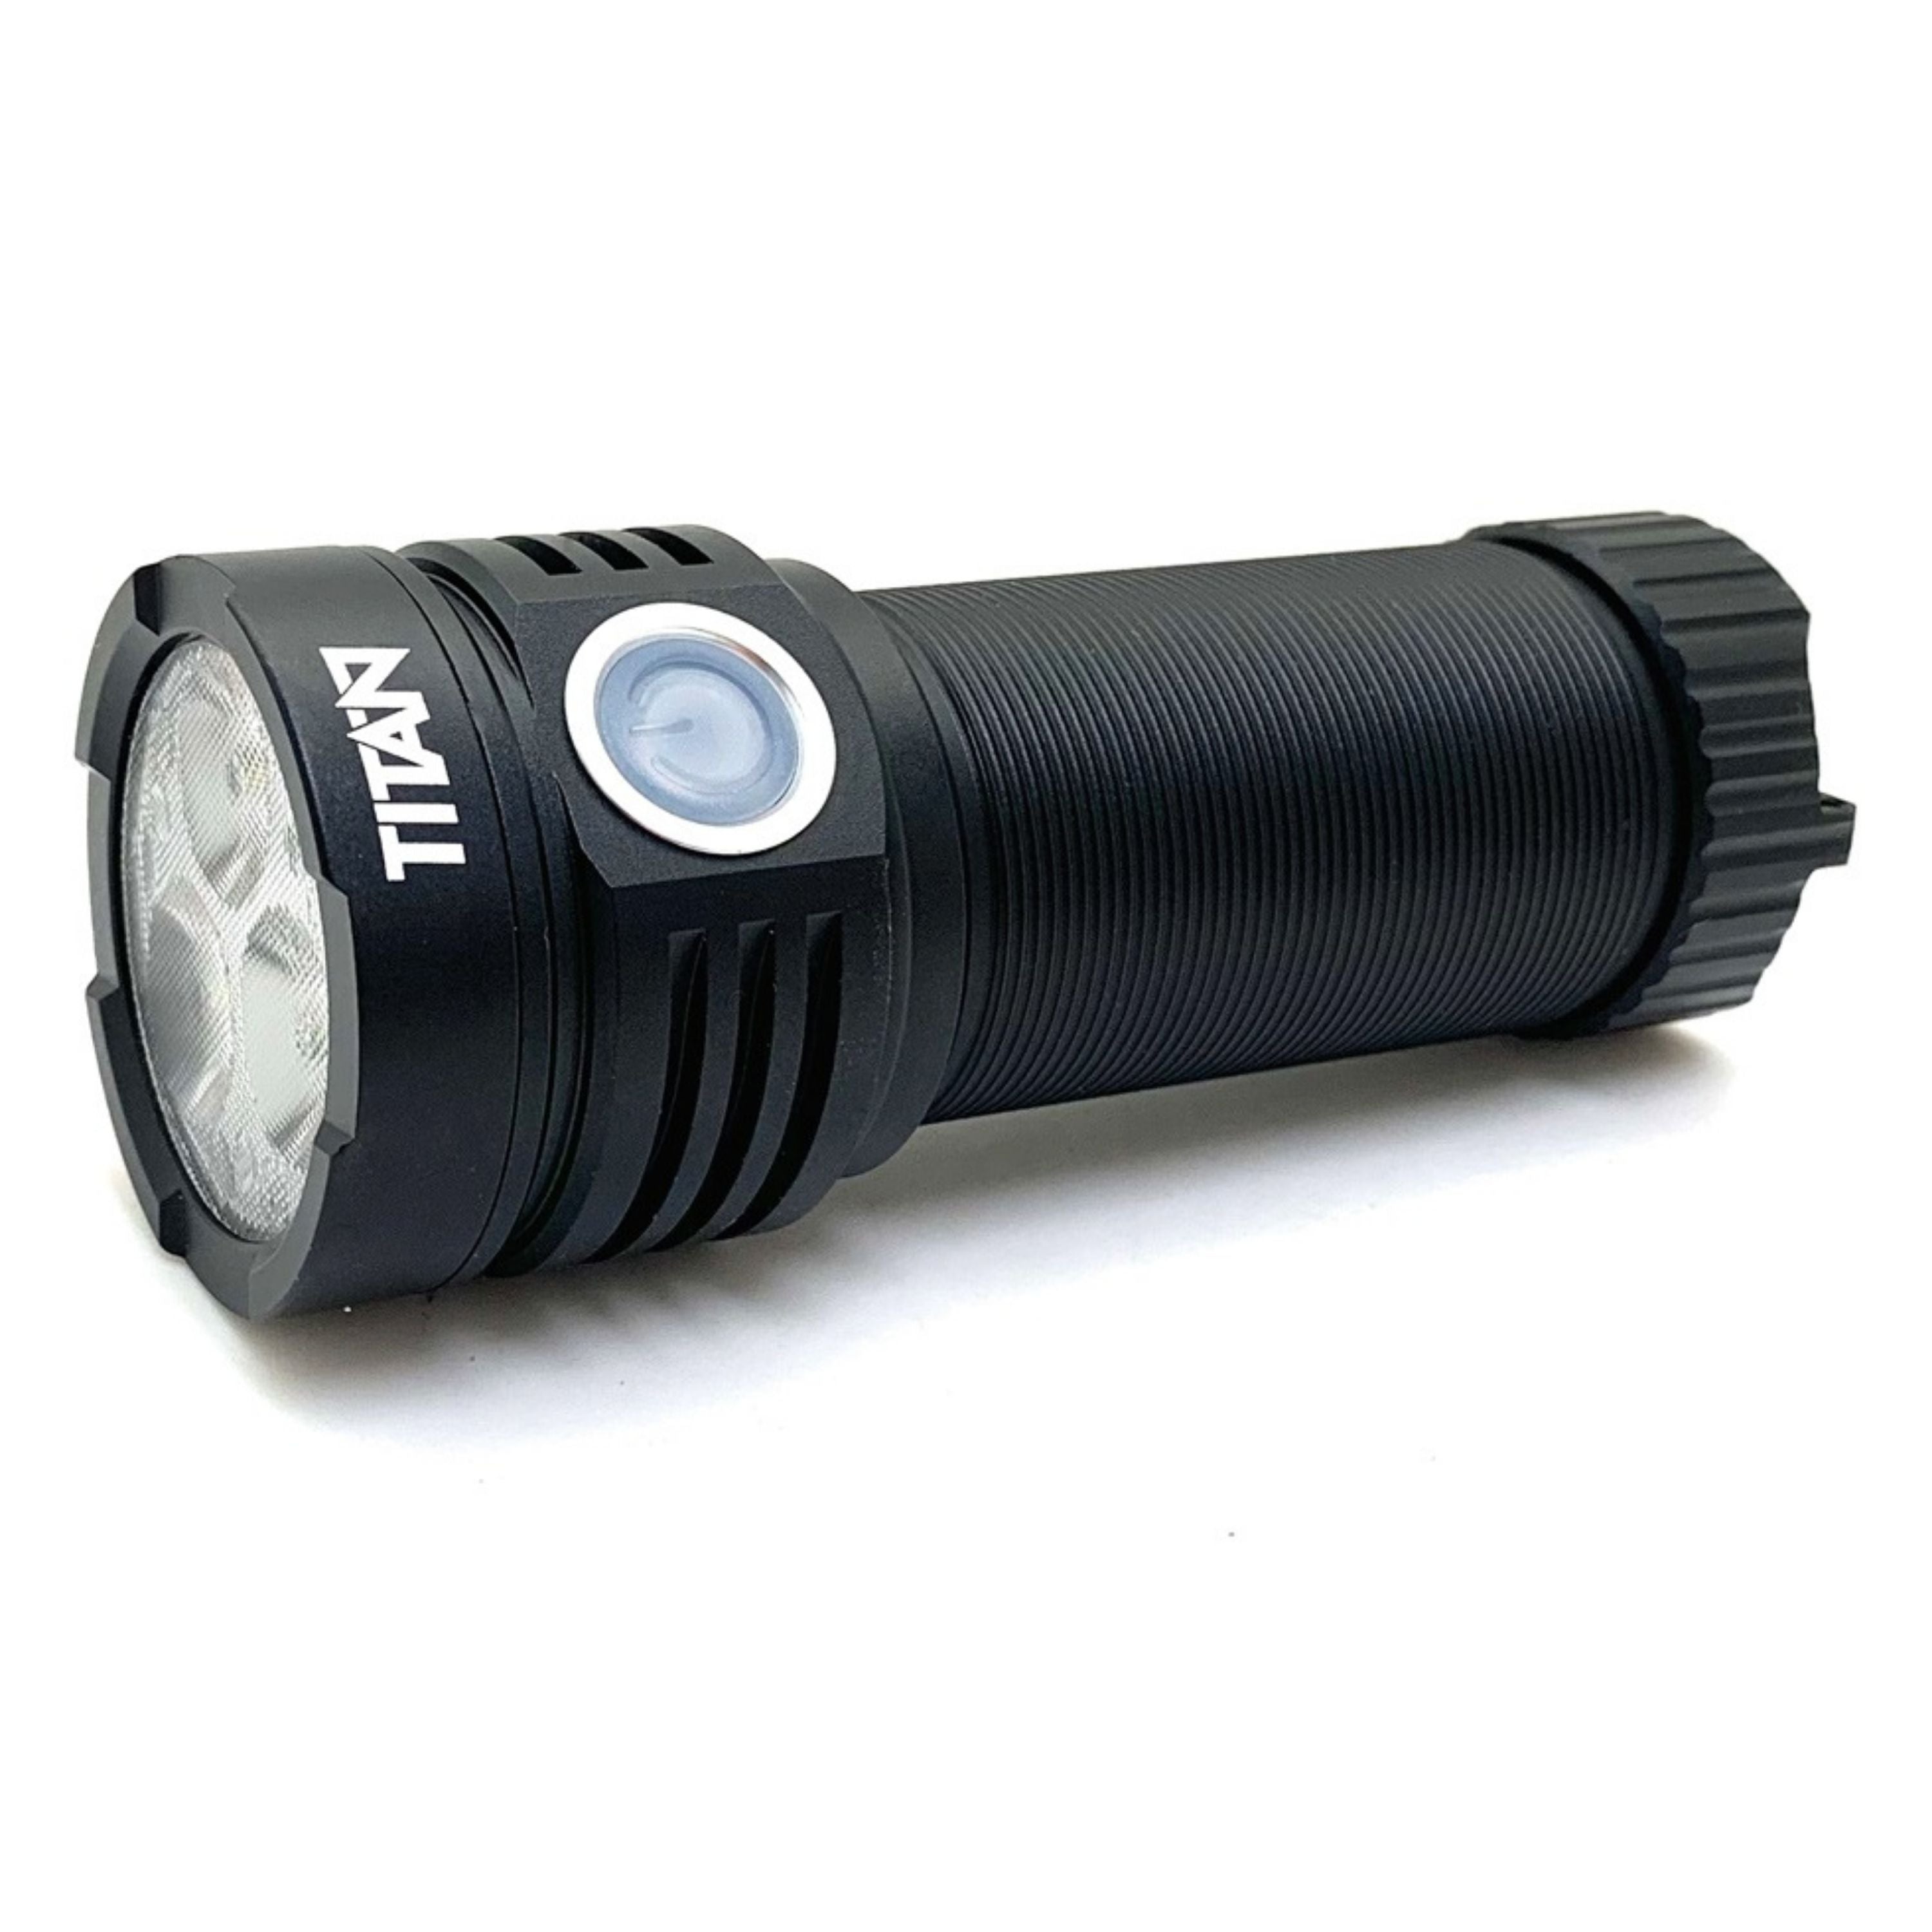 "Titan 3500" Flashlight